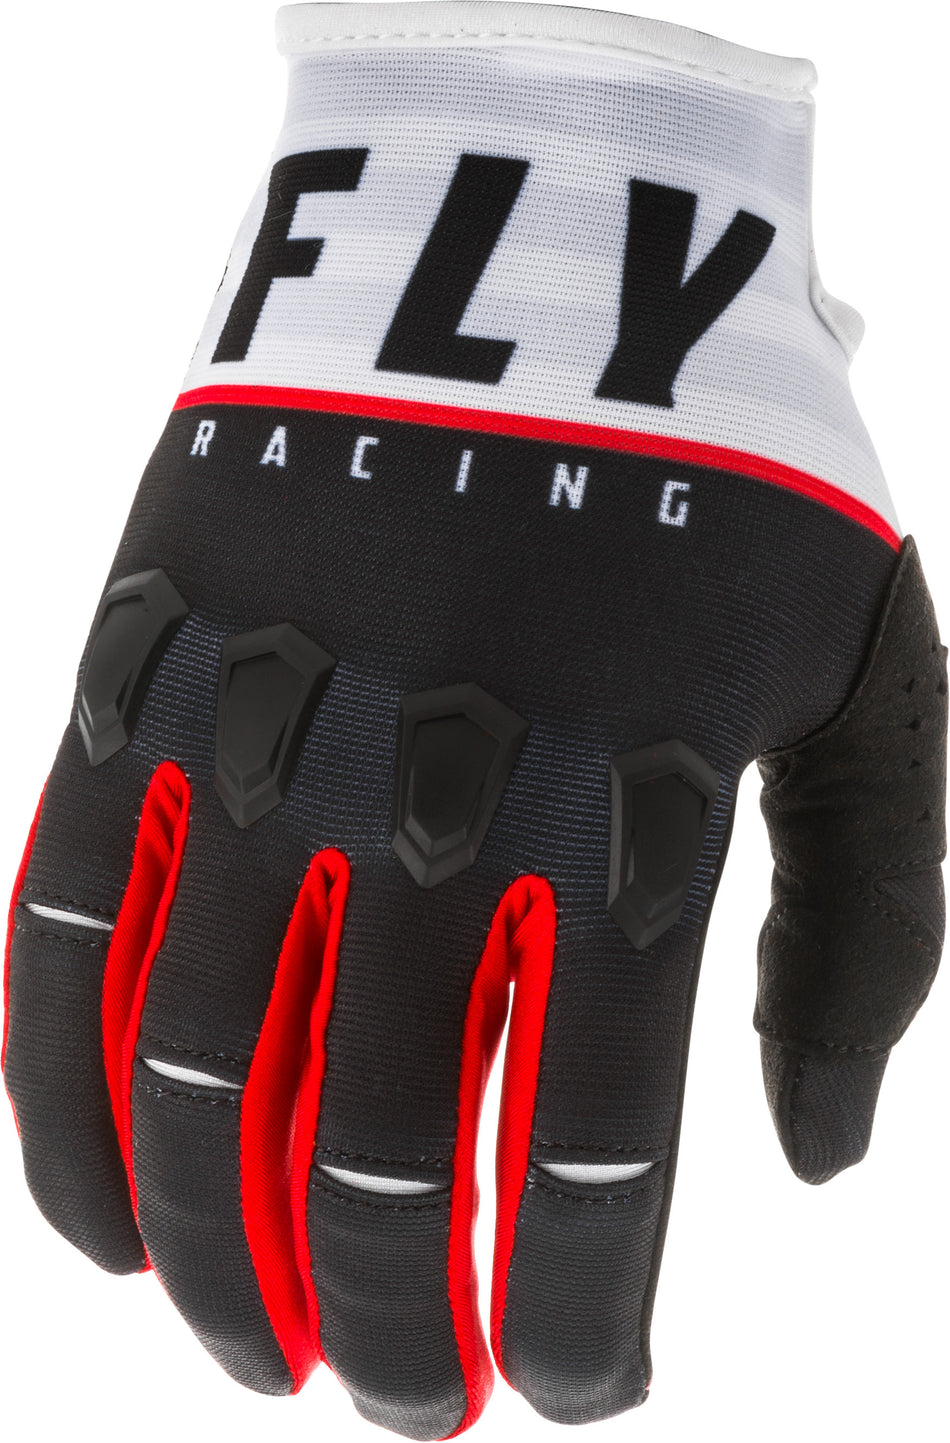 FLY RACING Kinetic K120 Gloves Black/White/Red Sz 11 373-41311